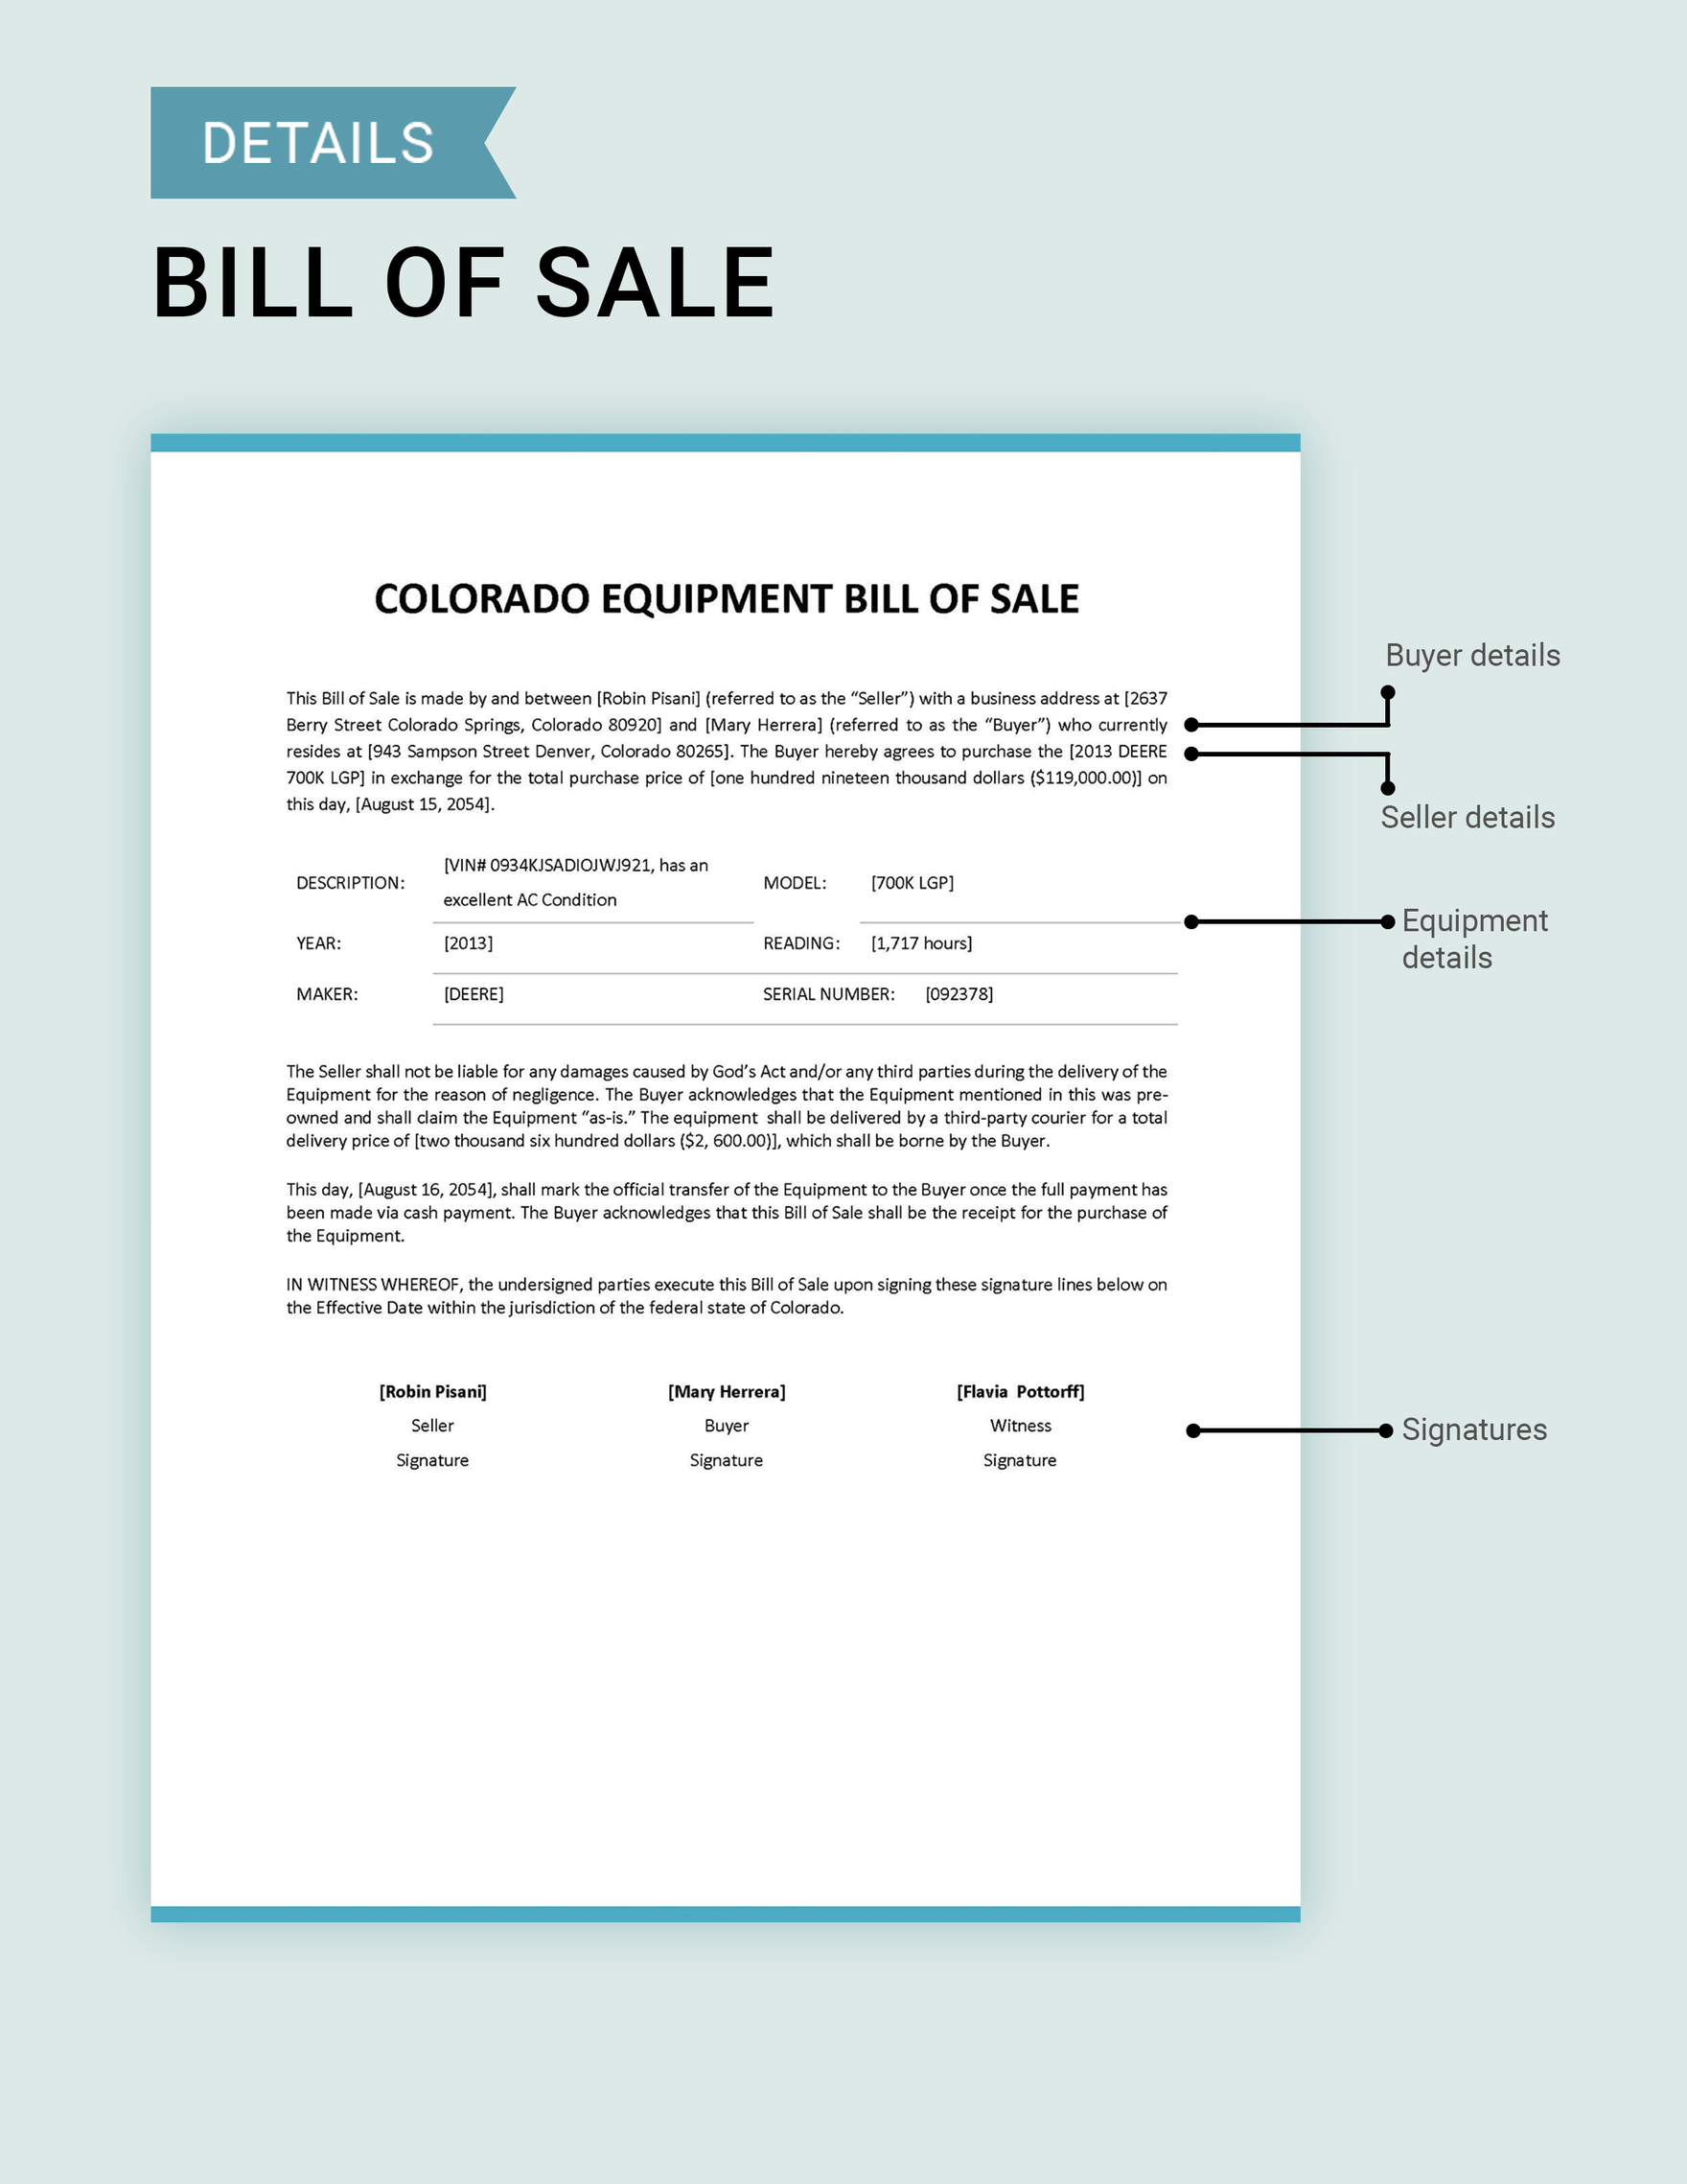 Colorado Equipment Bill of Sale Form Template